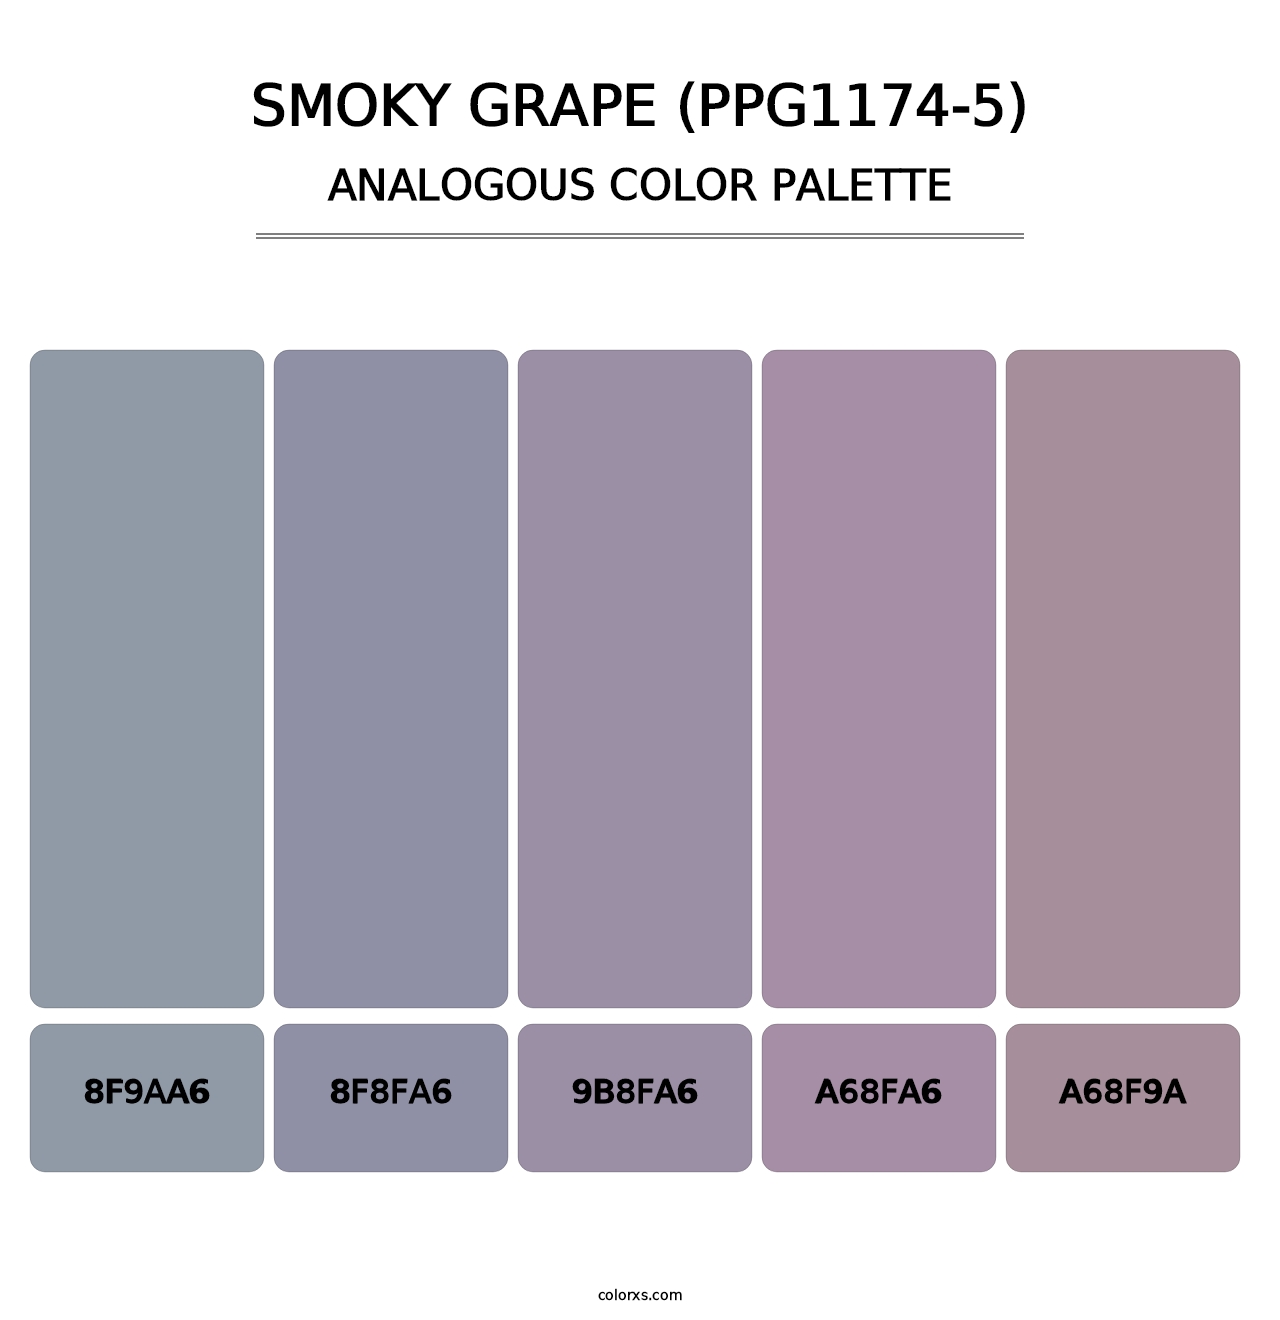 Smoky Grape (PPG1174-5) - Analogous Color Palette